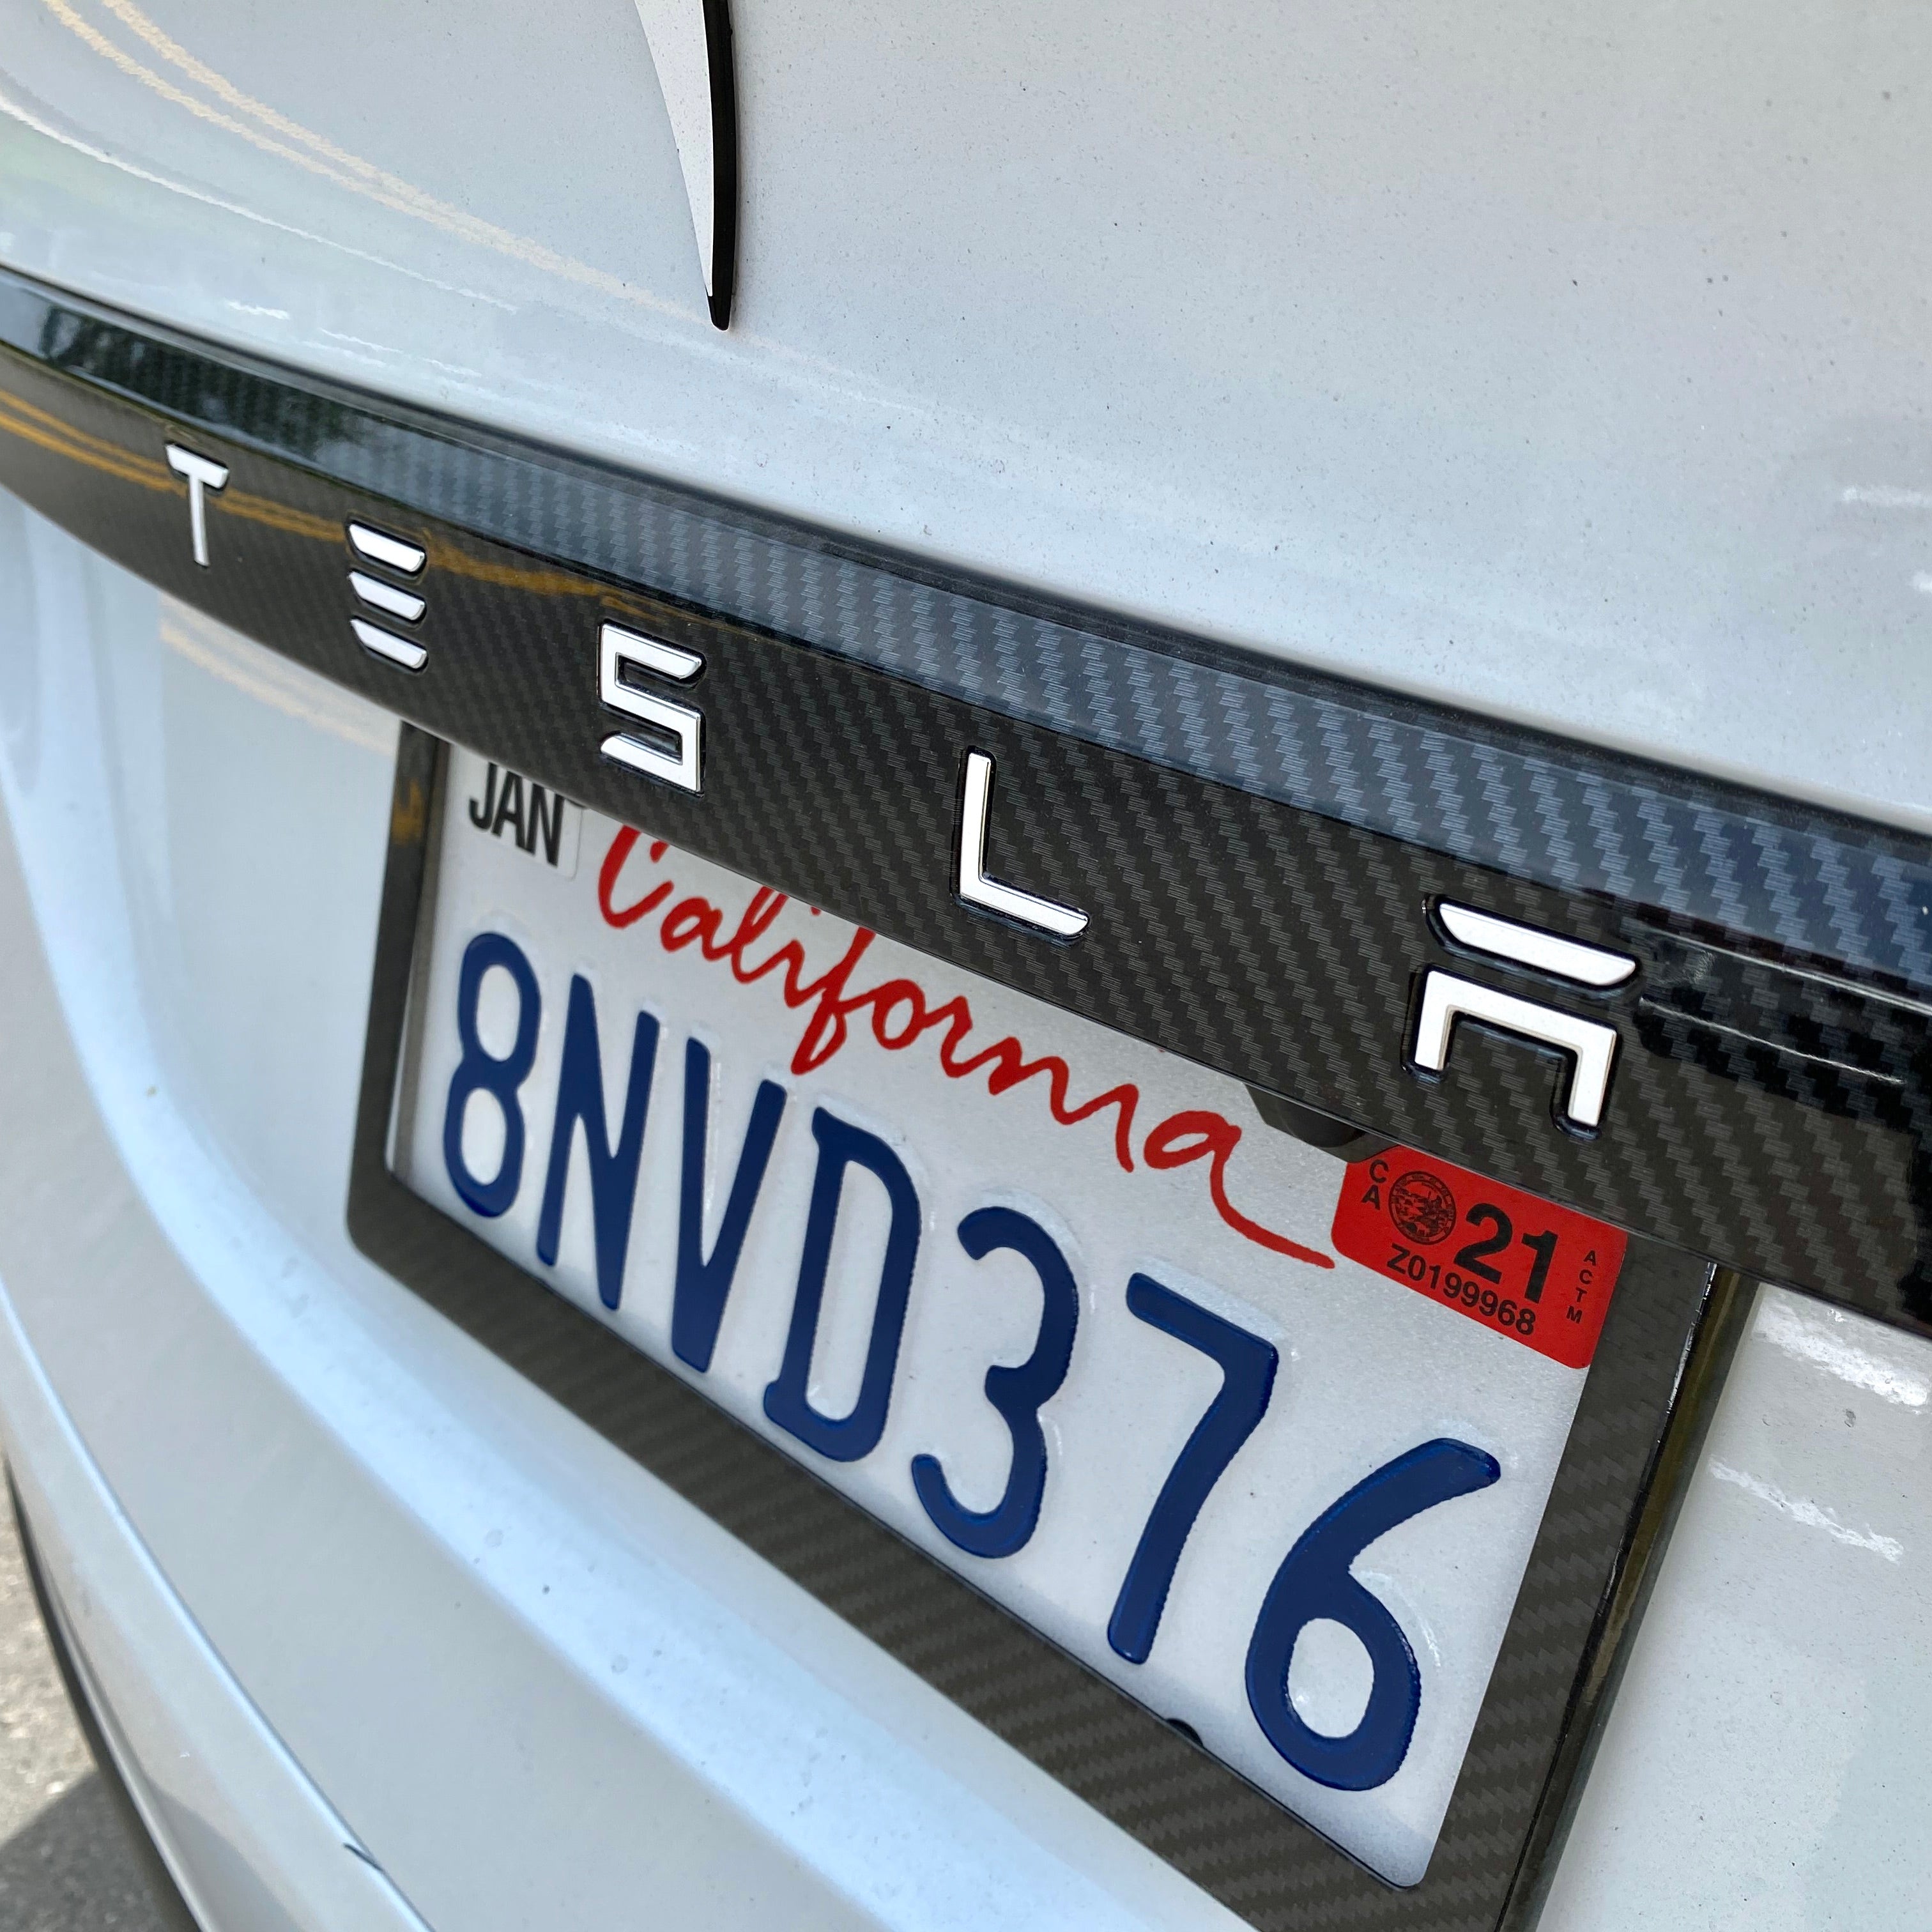 Genuine Matte Carbon Fiber Trunk Tailgate Trim for Tesla Model X 2015-2021